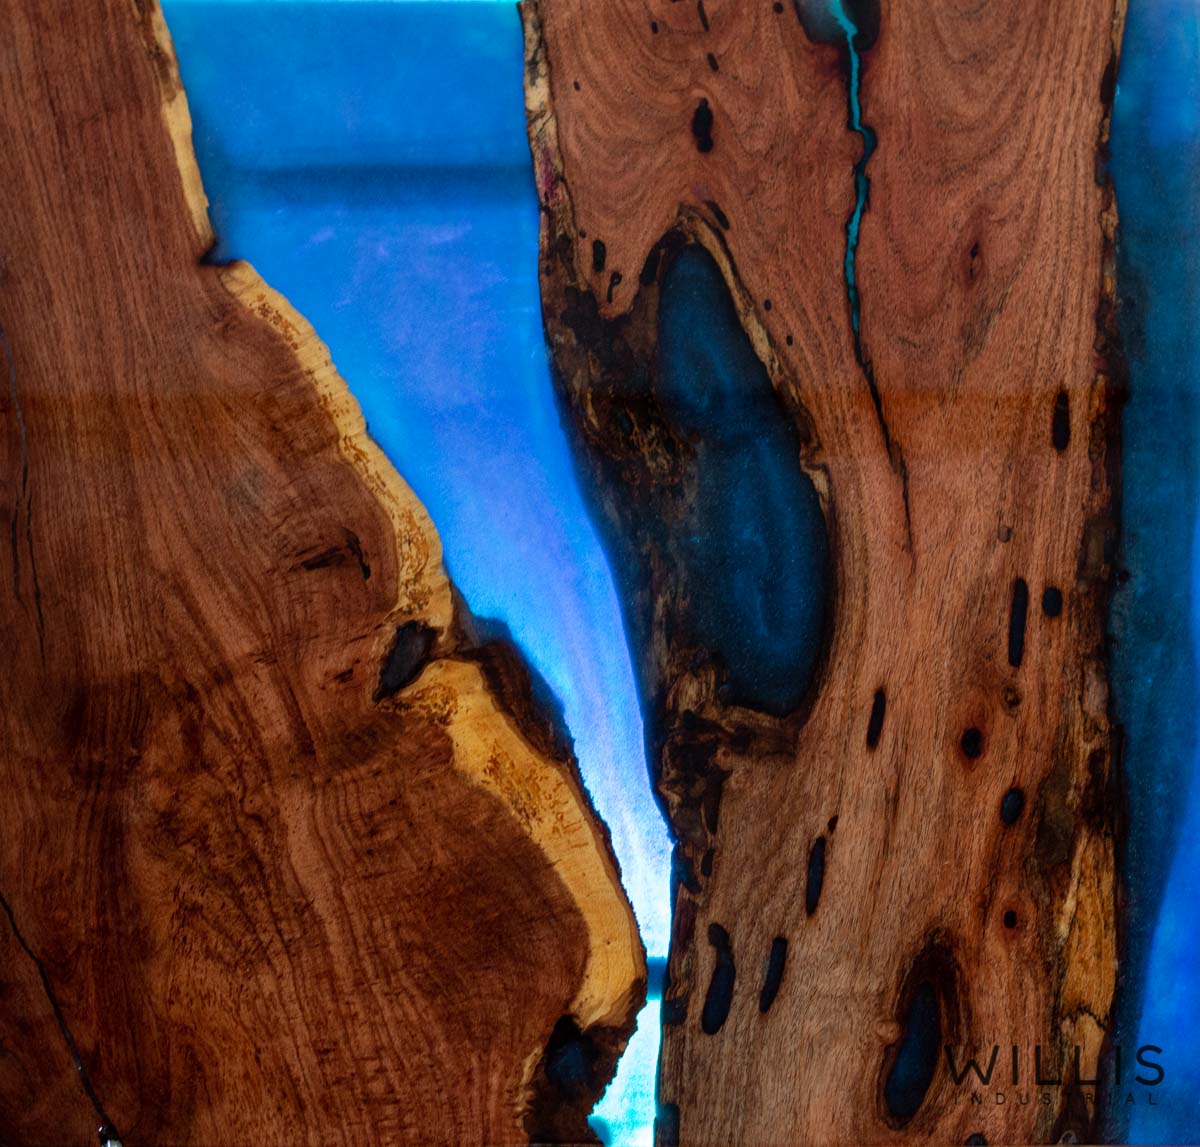 Willis Industrial Furniture | Rustic, Modern Furniture | Mesquite Slab Coffee Table with Azure Blue Metallic Epoxy